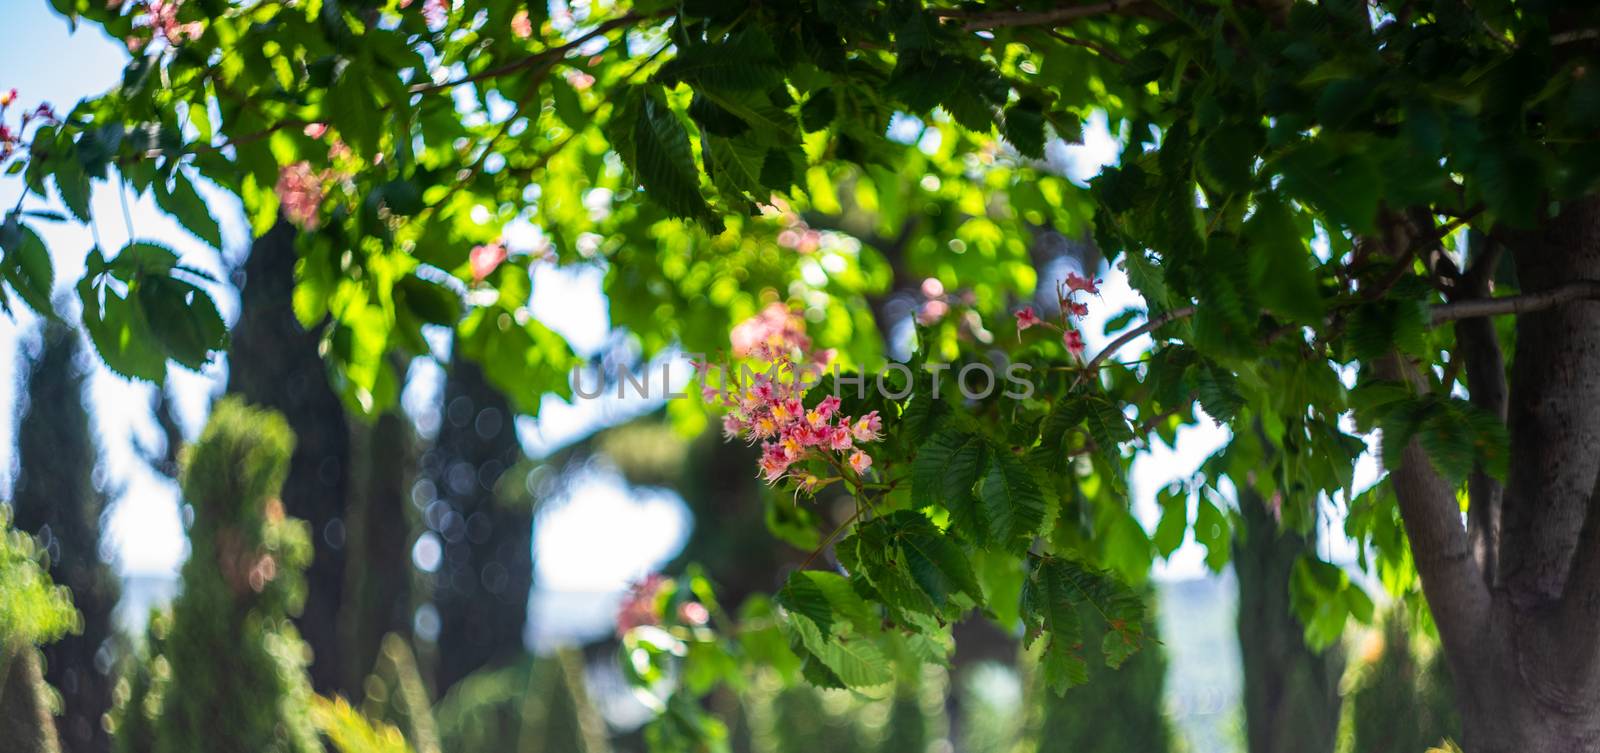 flowers of chesnut tree by Elet